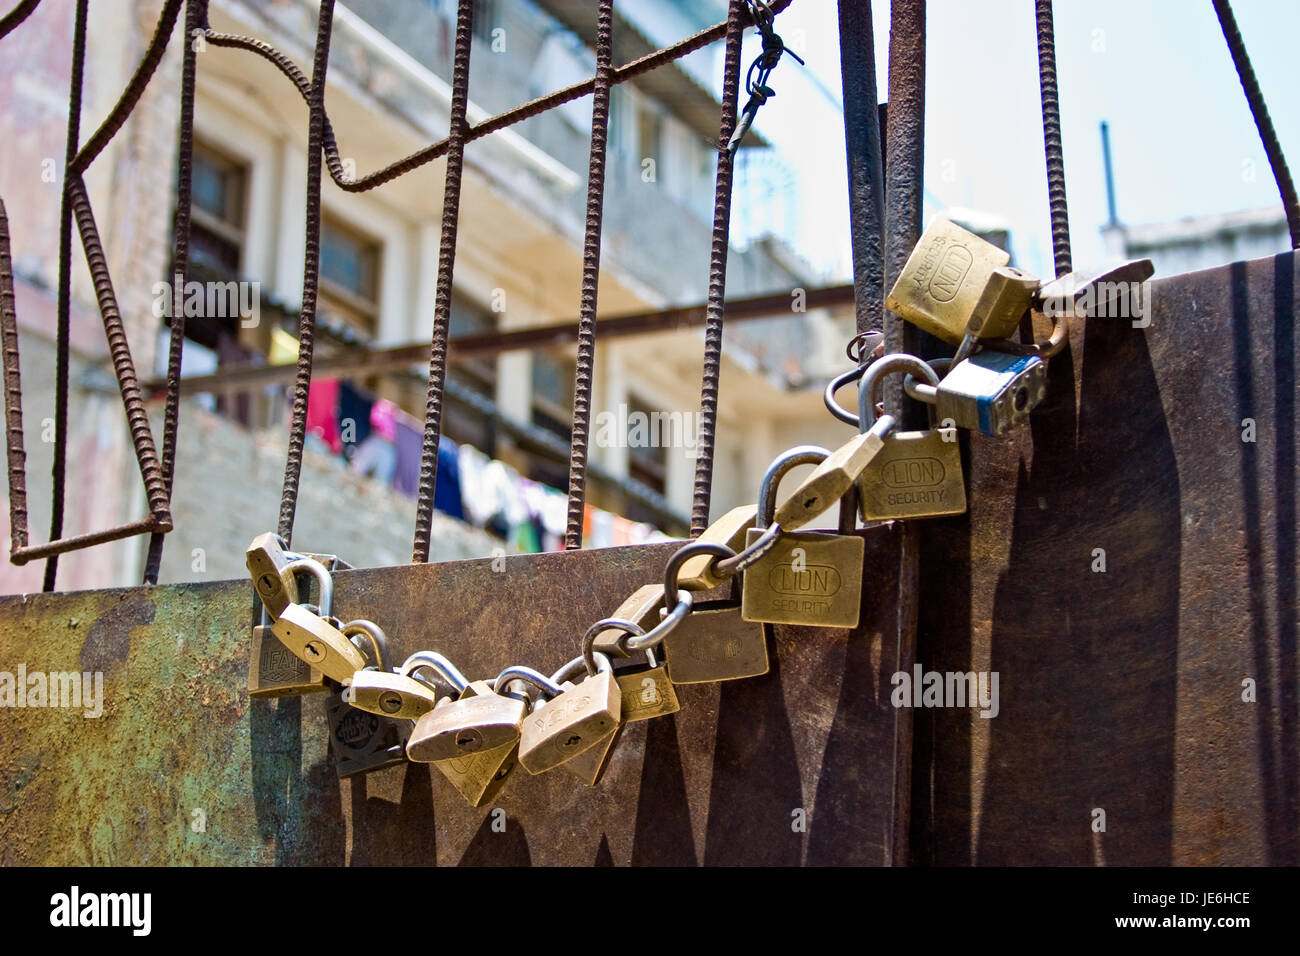 A set of locks in havana building Stock Photo